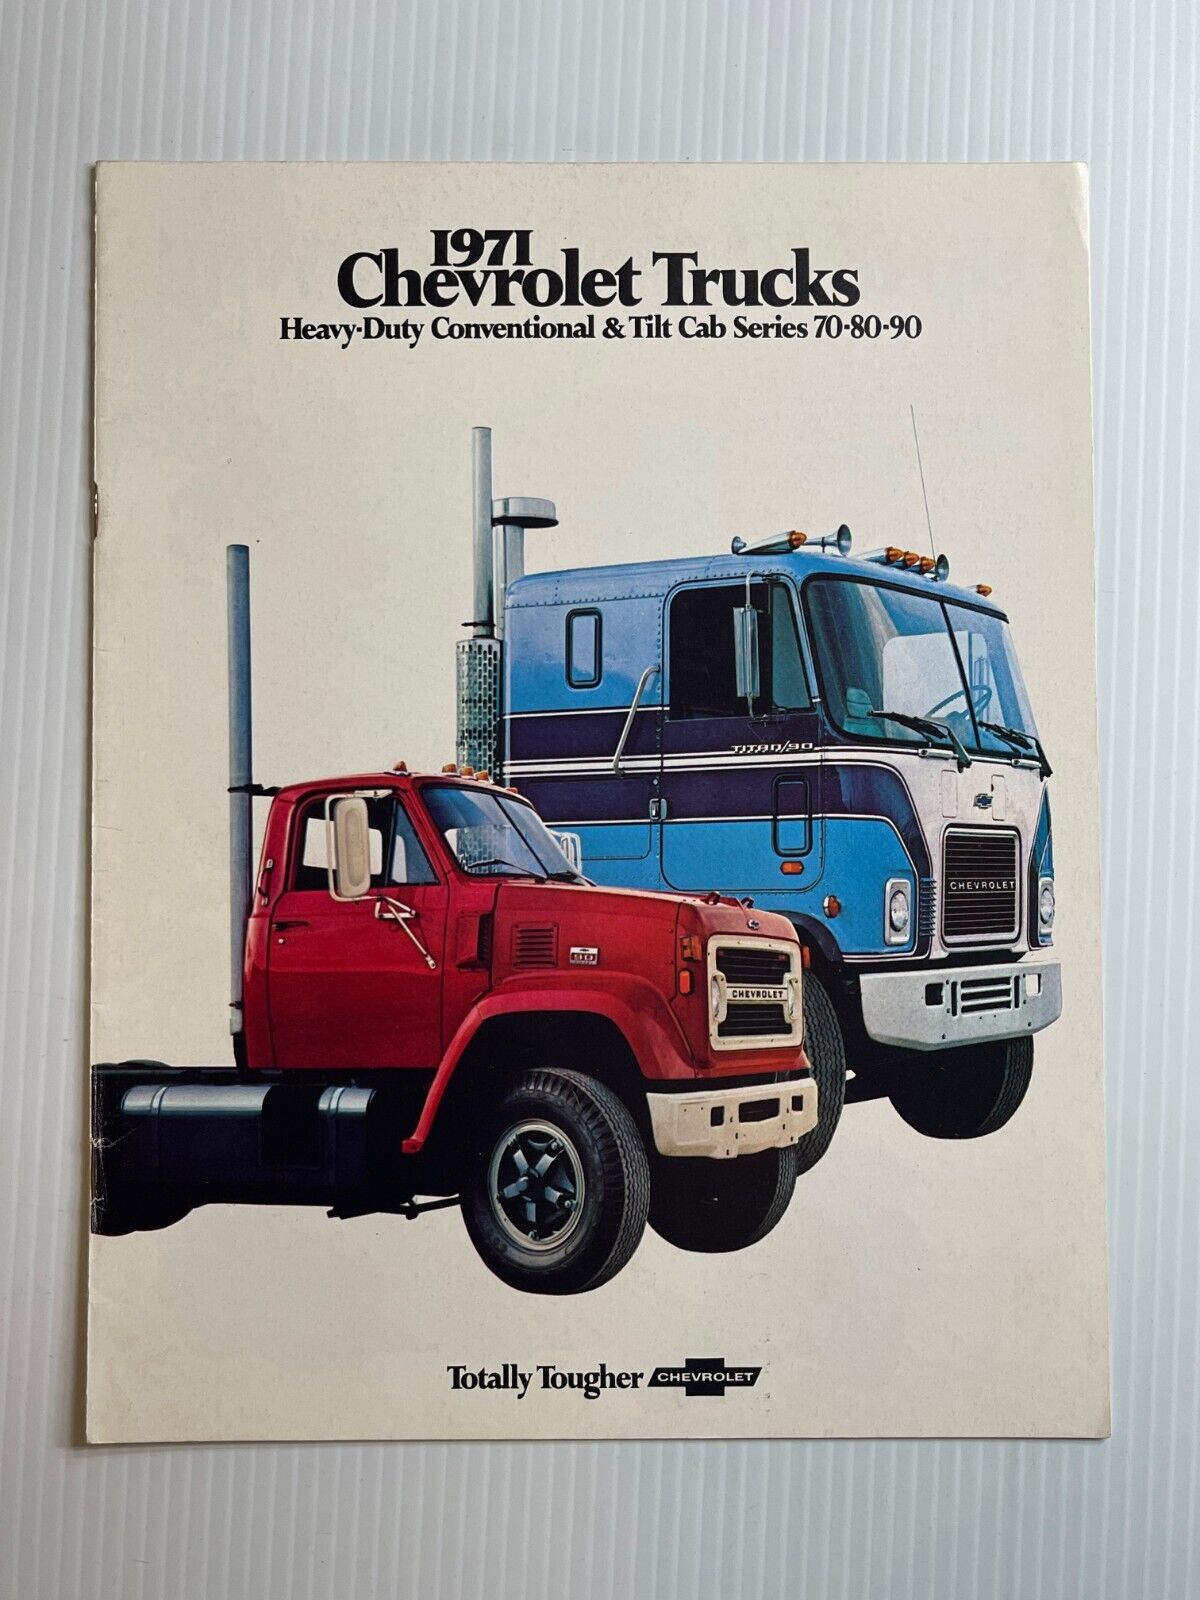 Vintage Original 1971 Chevy Heavy Duty Trucks *Sales Brochure* (20 Color Pages)